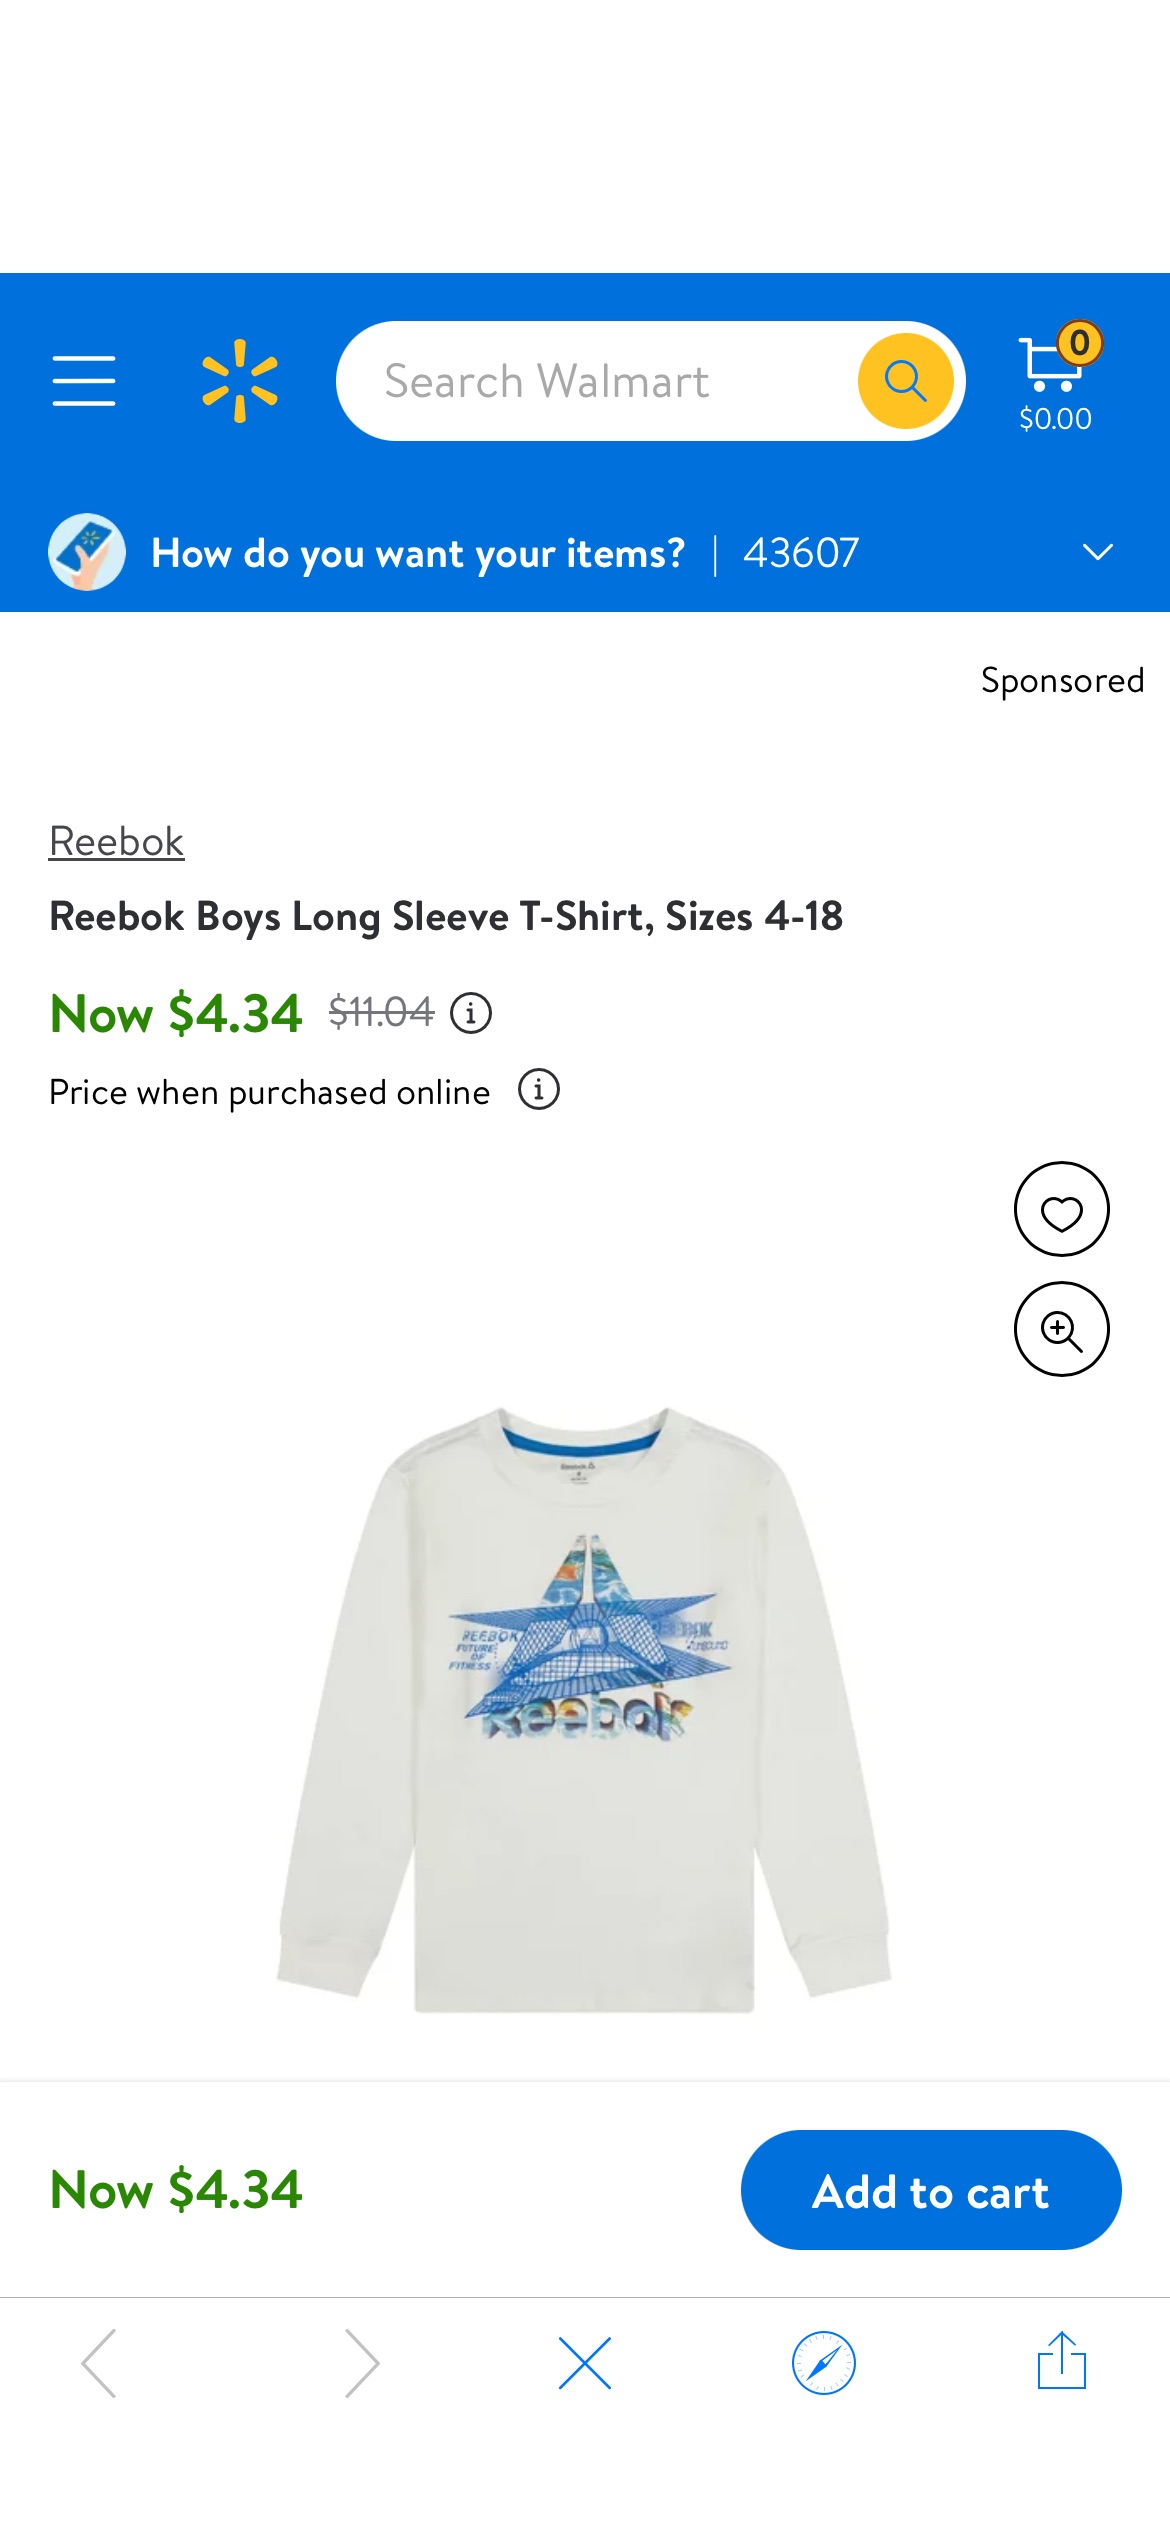 Reebok Boys Long Sleeve T-Shirt, 尺寸4-18 - Walmart.com